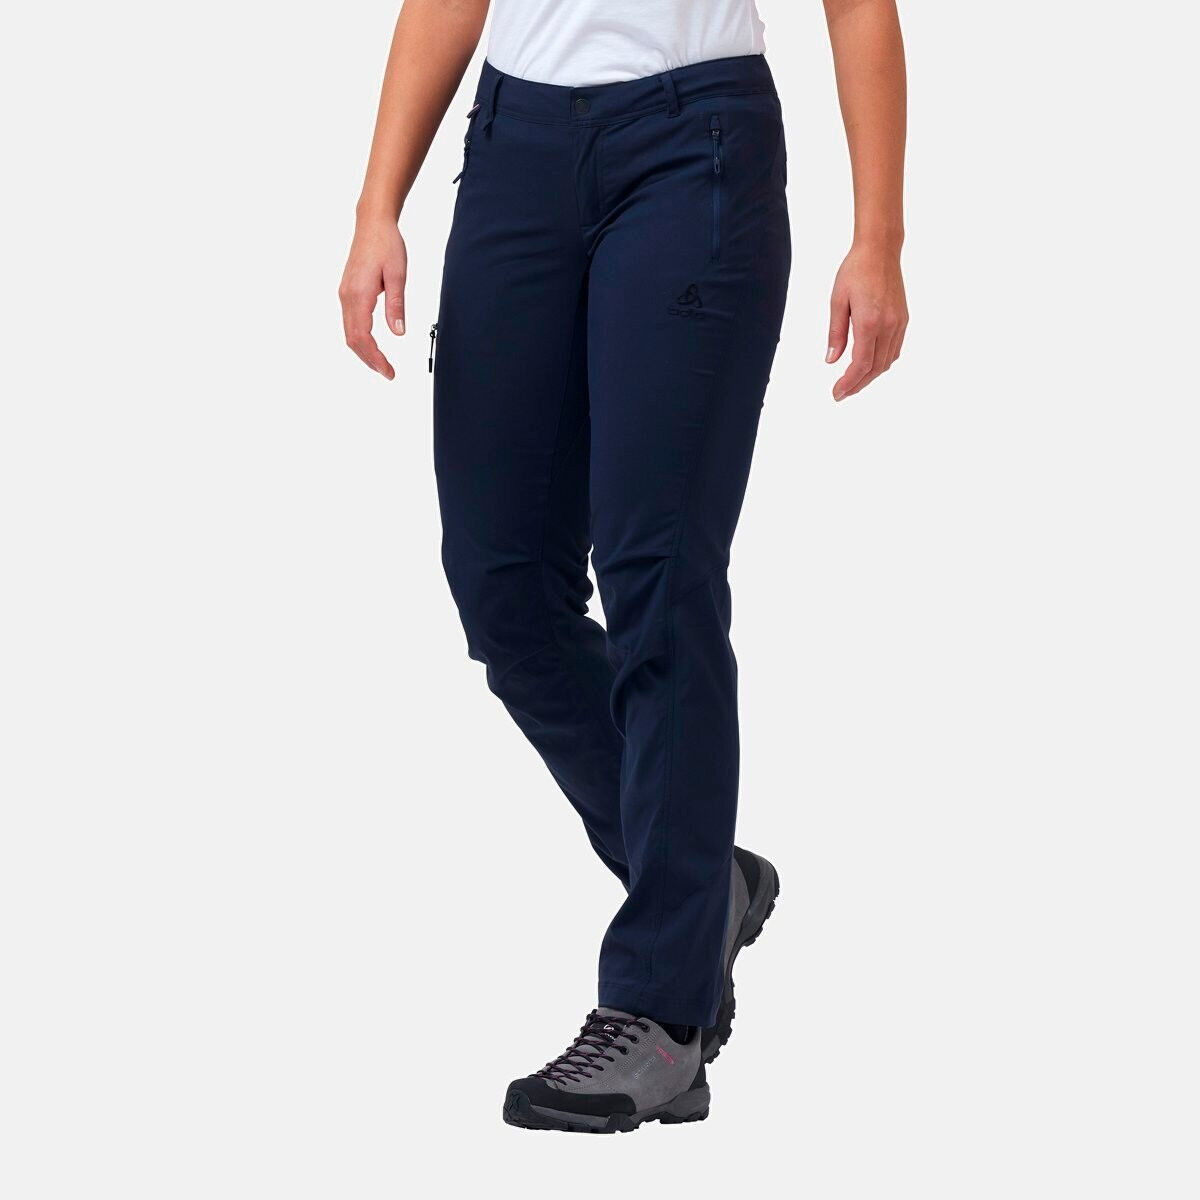 Odlo Tights Ascent - Walking trousers Women's